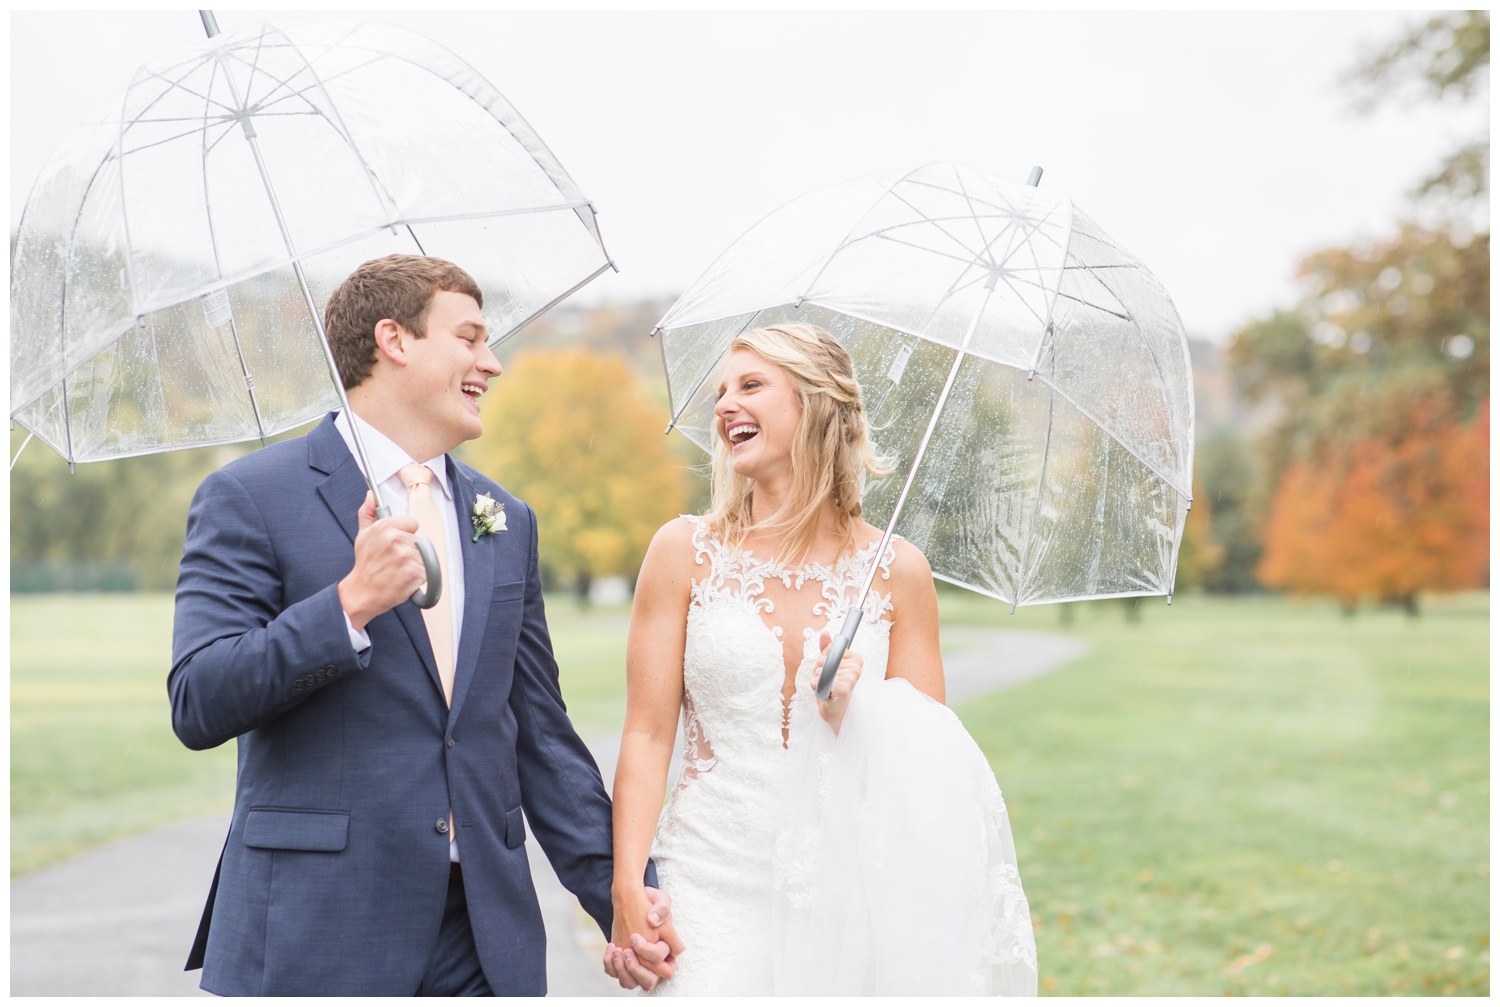 Rainy Fall Wedding Portraits - Bride and Groom with Umbrellas - Cincinnati Wedding